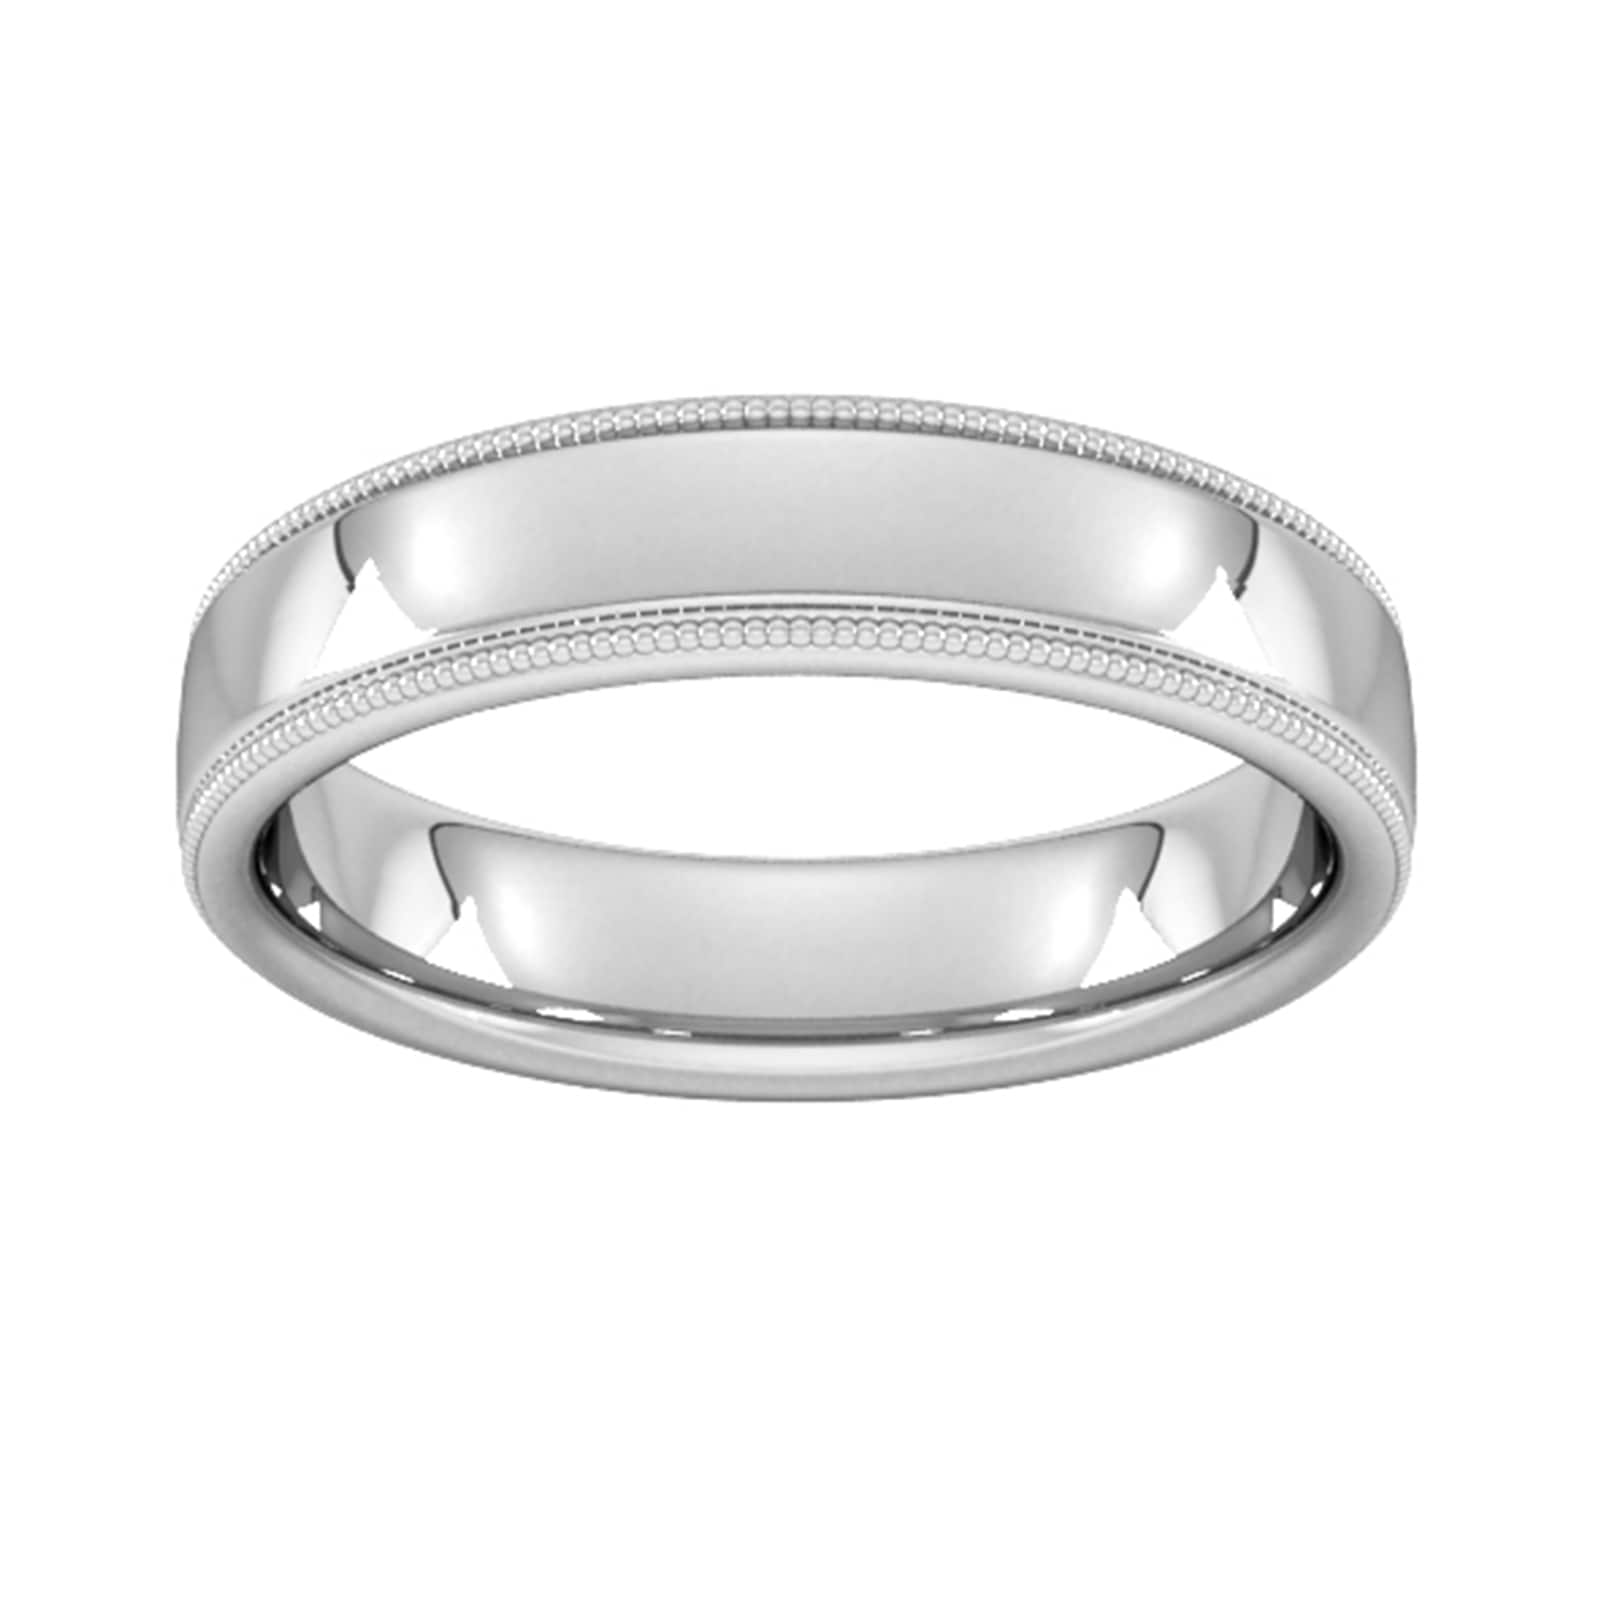 5mm Slight Court Extra Heavy Milgrain Edge Wedding Ring In 18 Carat White Gold - Ring Size Q